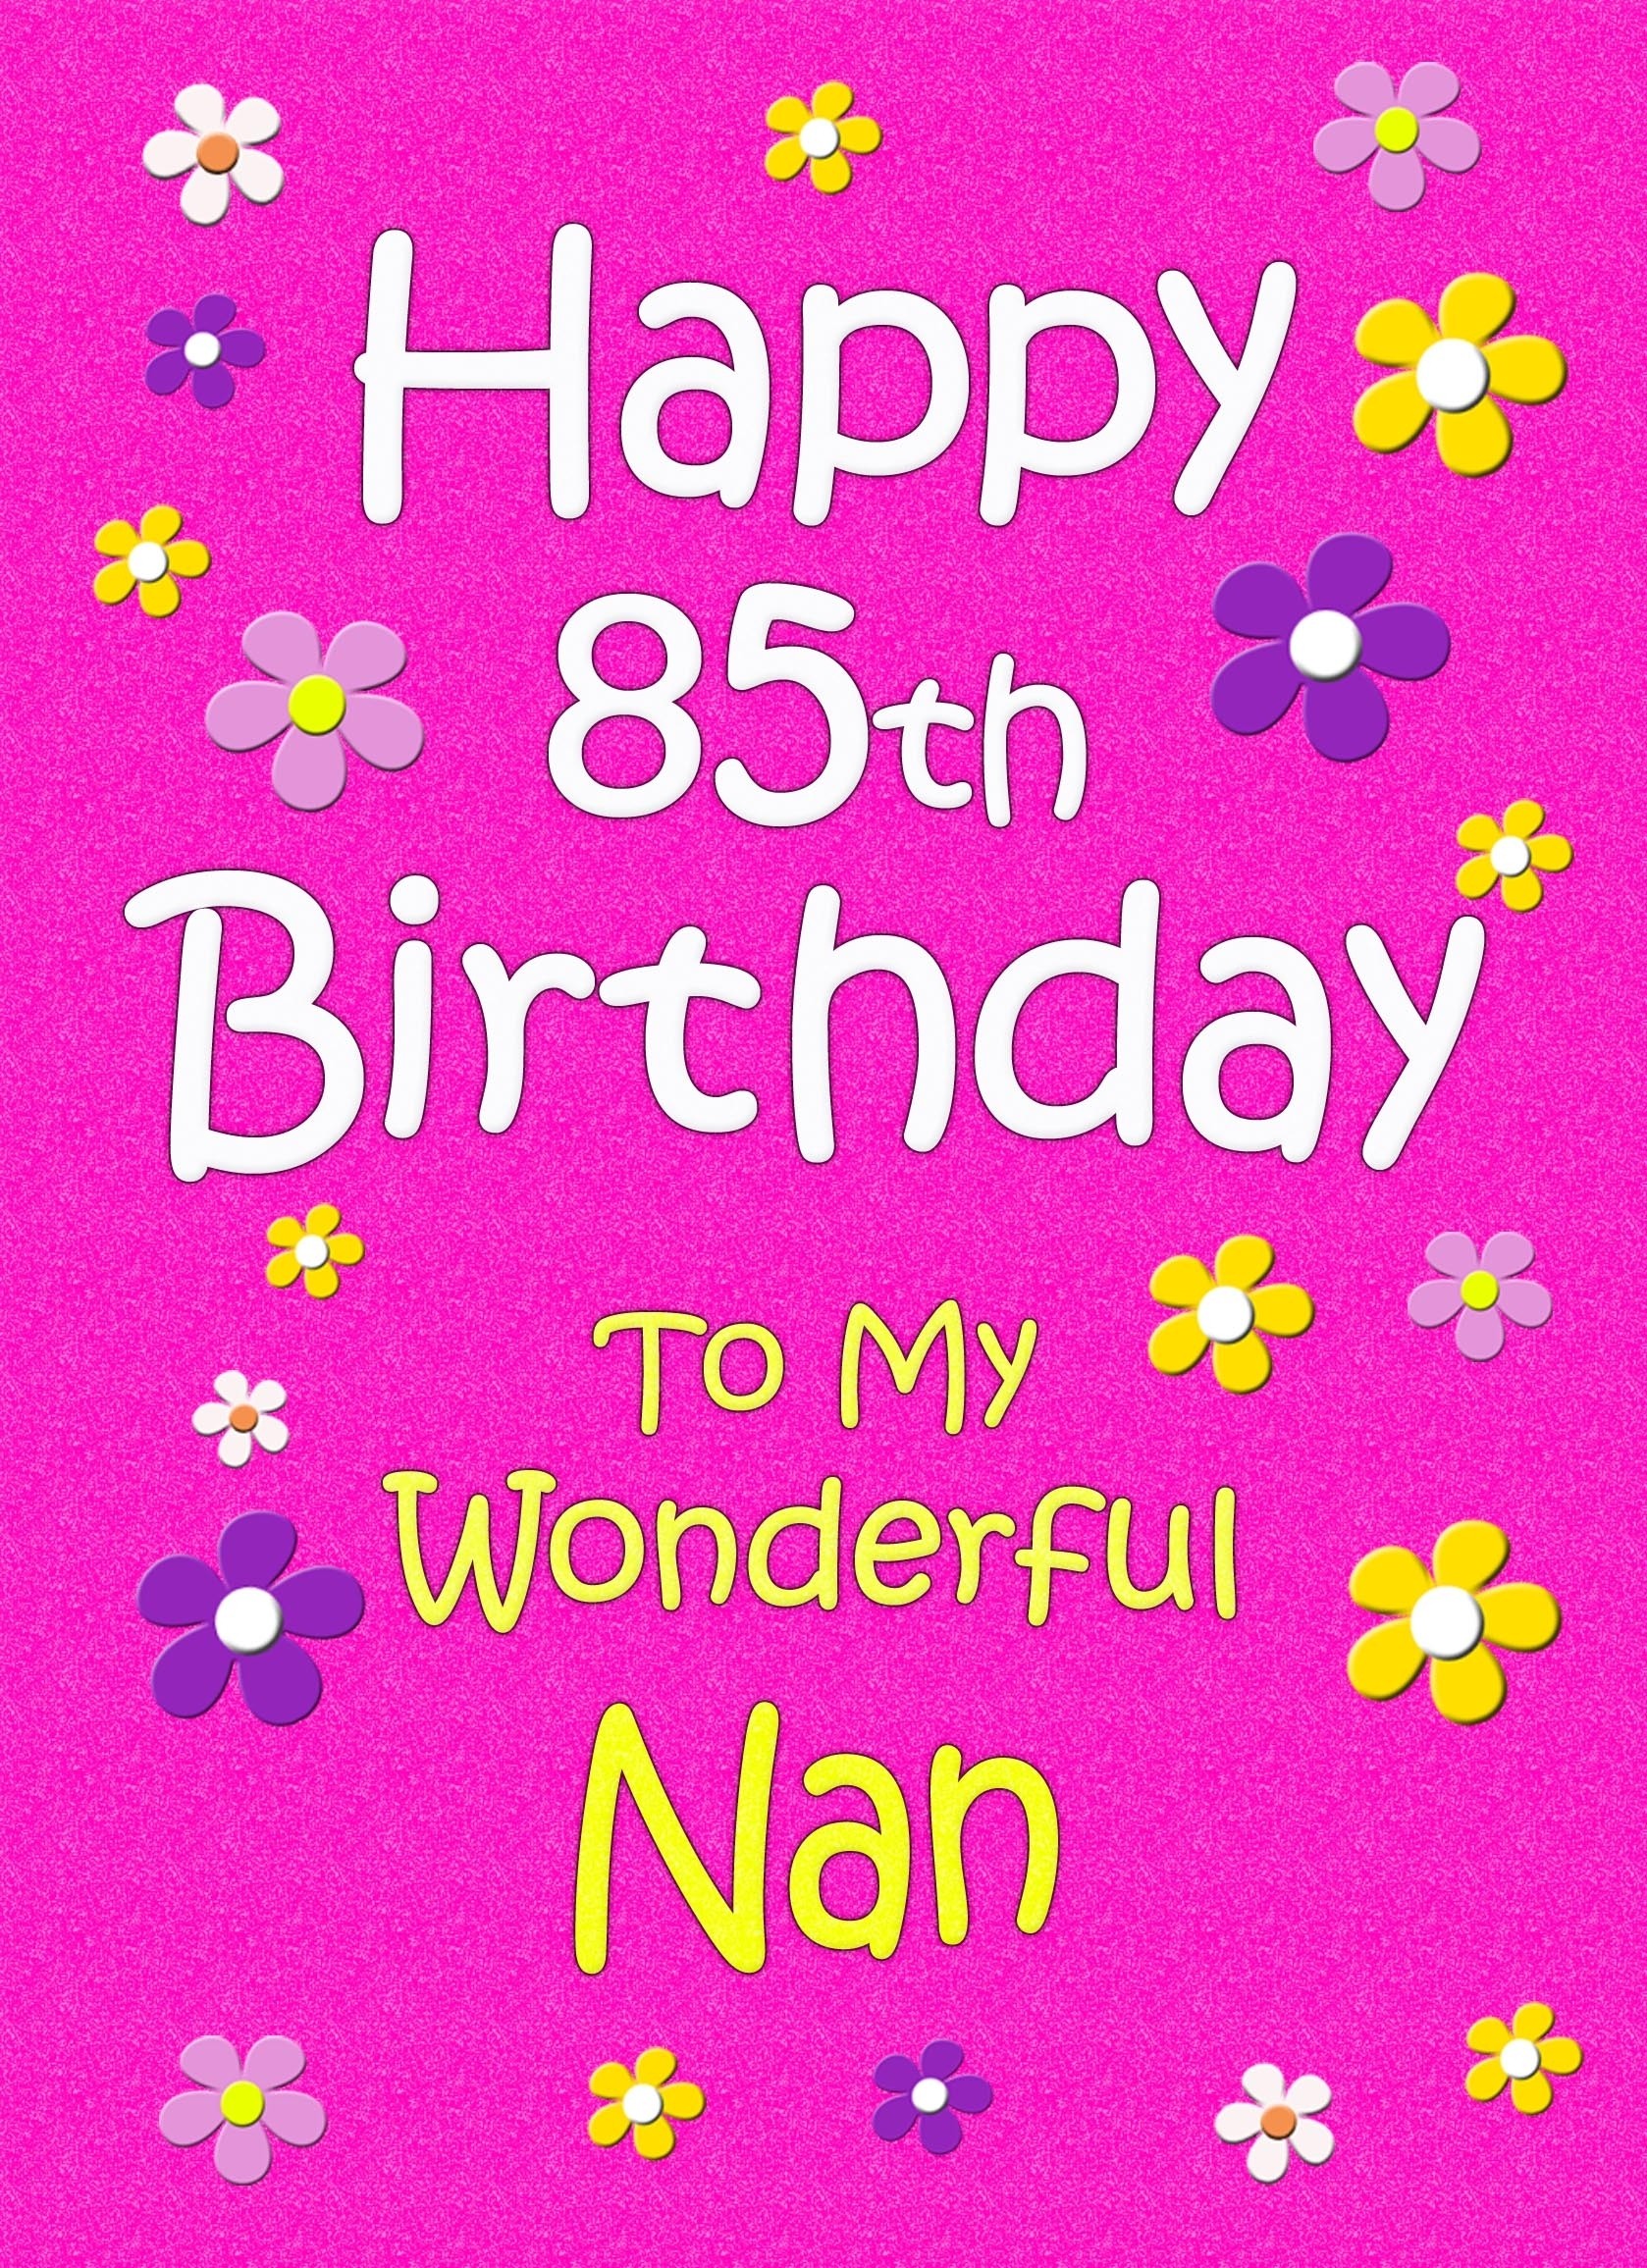 Nan 85th Birthday Card (Pink)